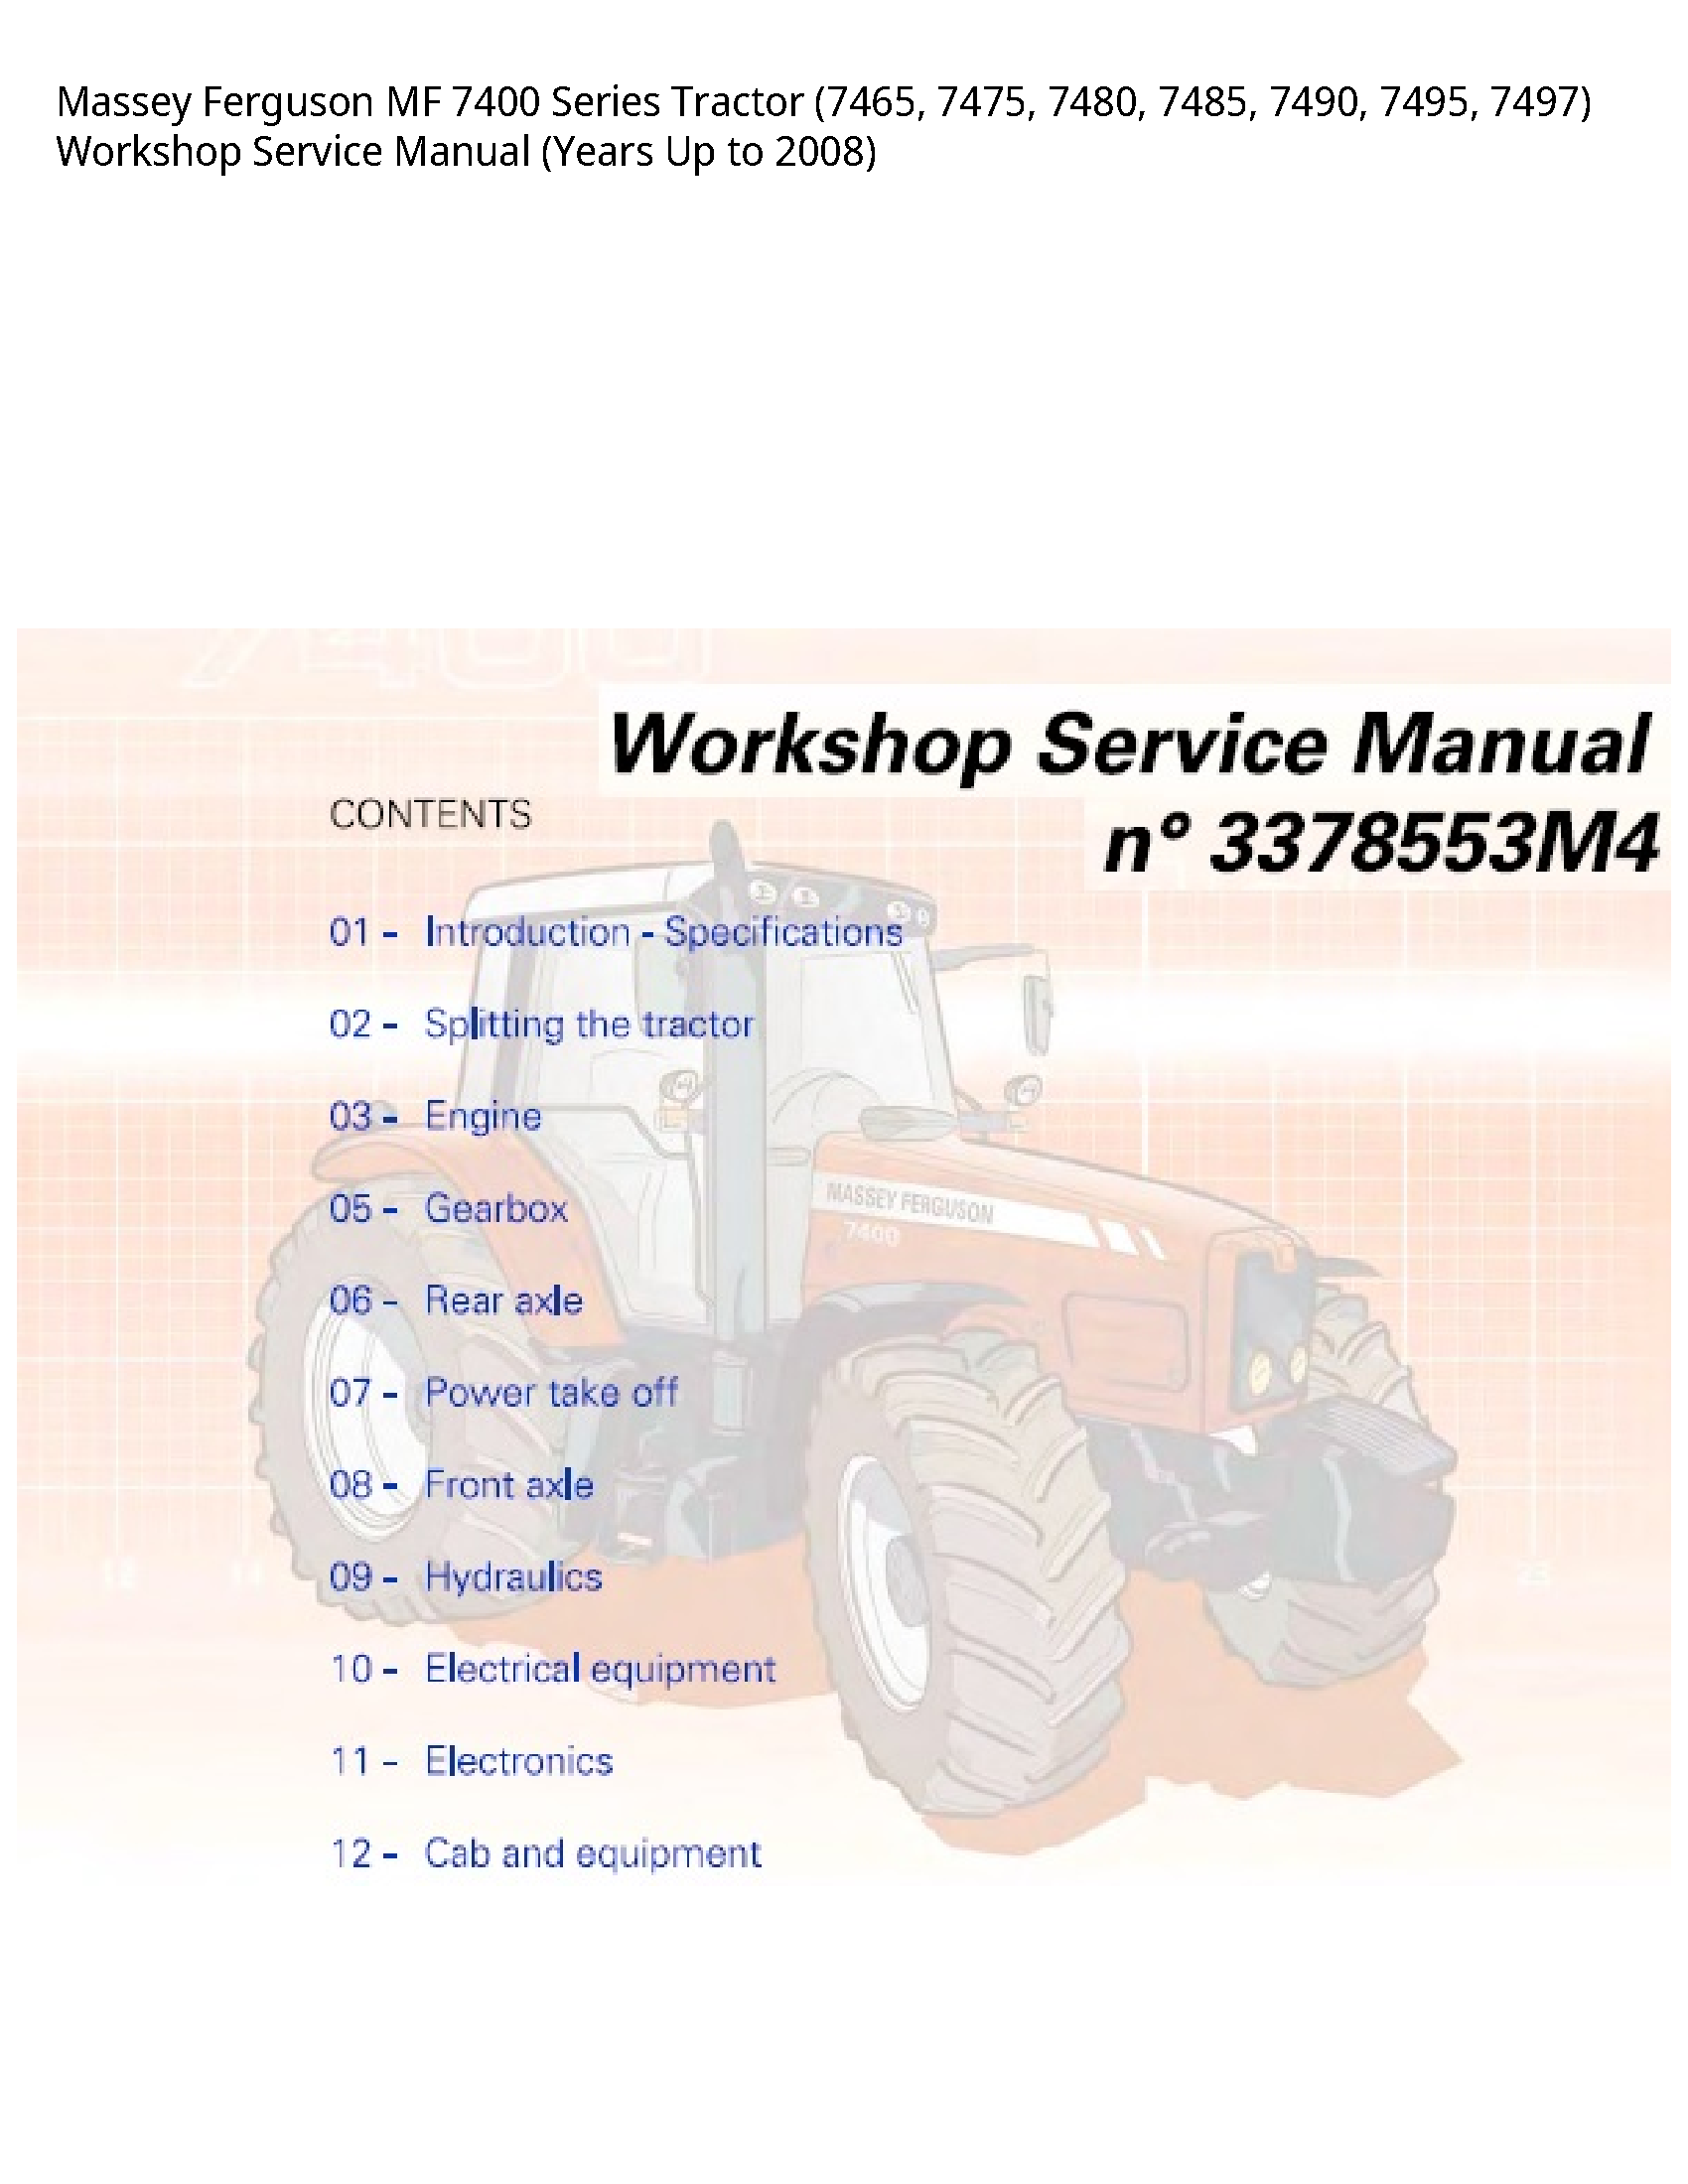 Massey Ferguson 7400 MF Series Tractor Service manual